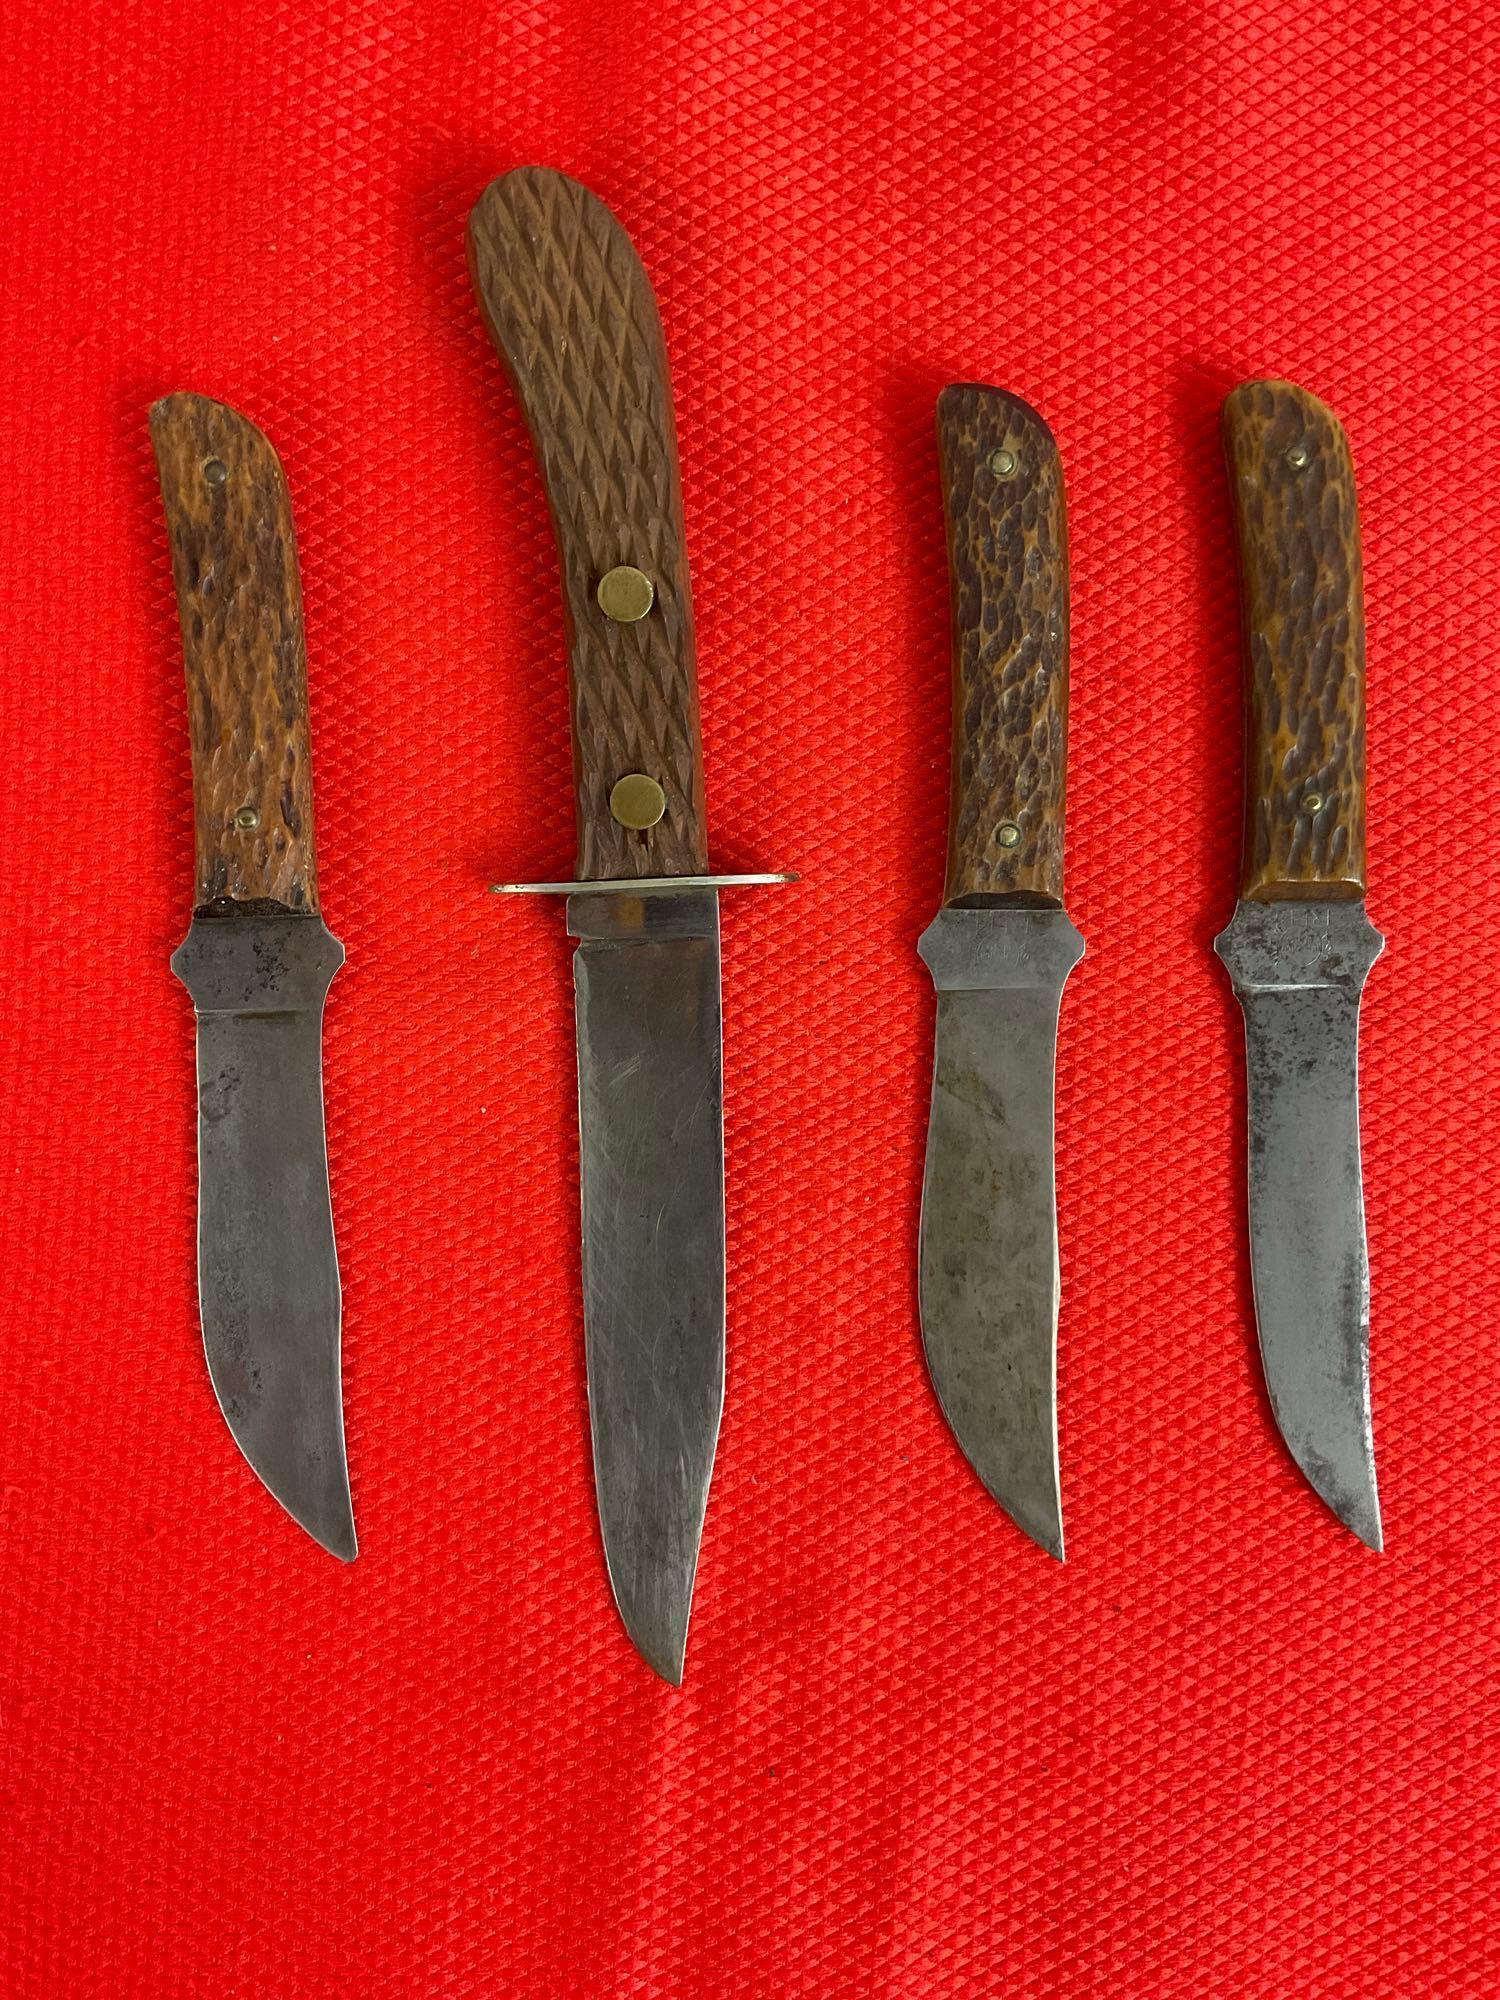 4 pcs Vintage Remington Steel Fixed Blade Hunting Knives. 3x Models RH-4 & 1 RH-6. 3 Sheathes. See